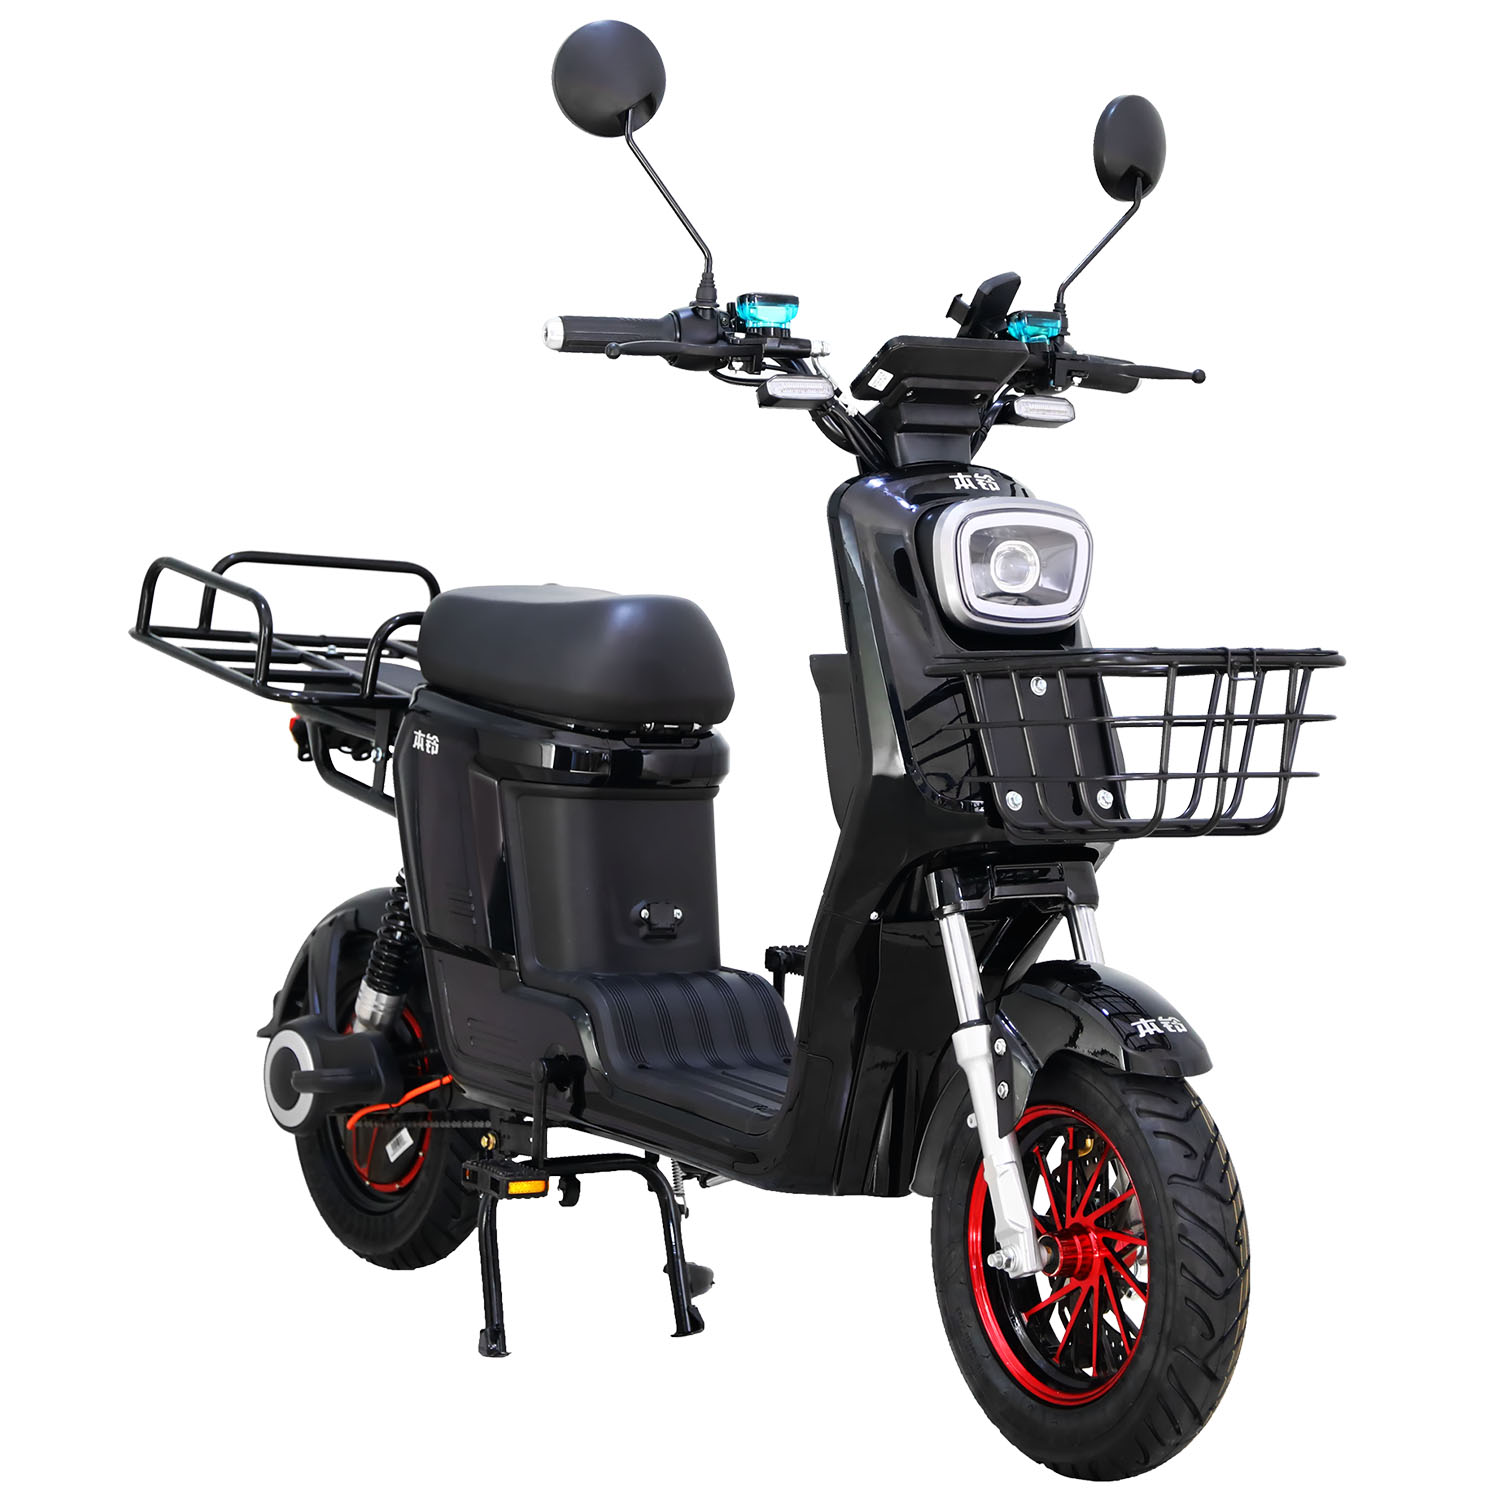 48V / 60V ROBIN-9 2-kołowy rower elektryczny dla dorosłych